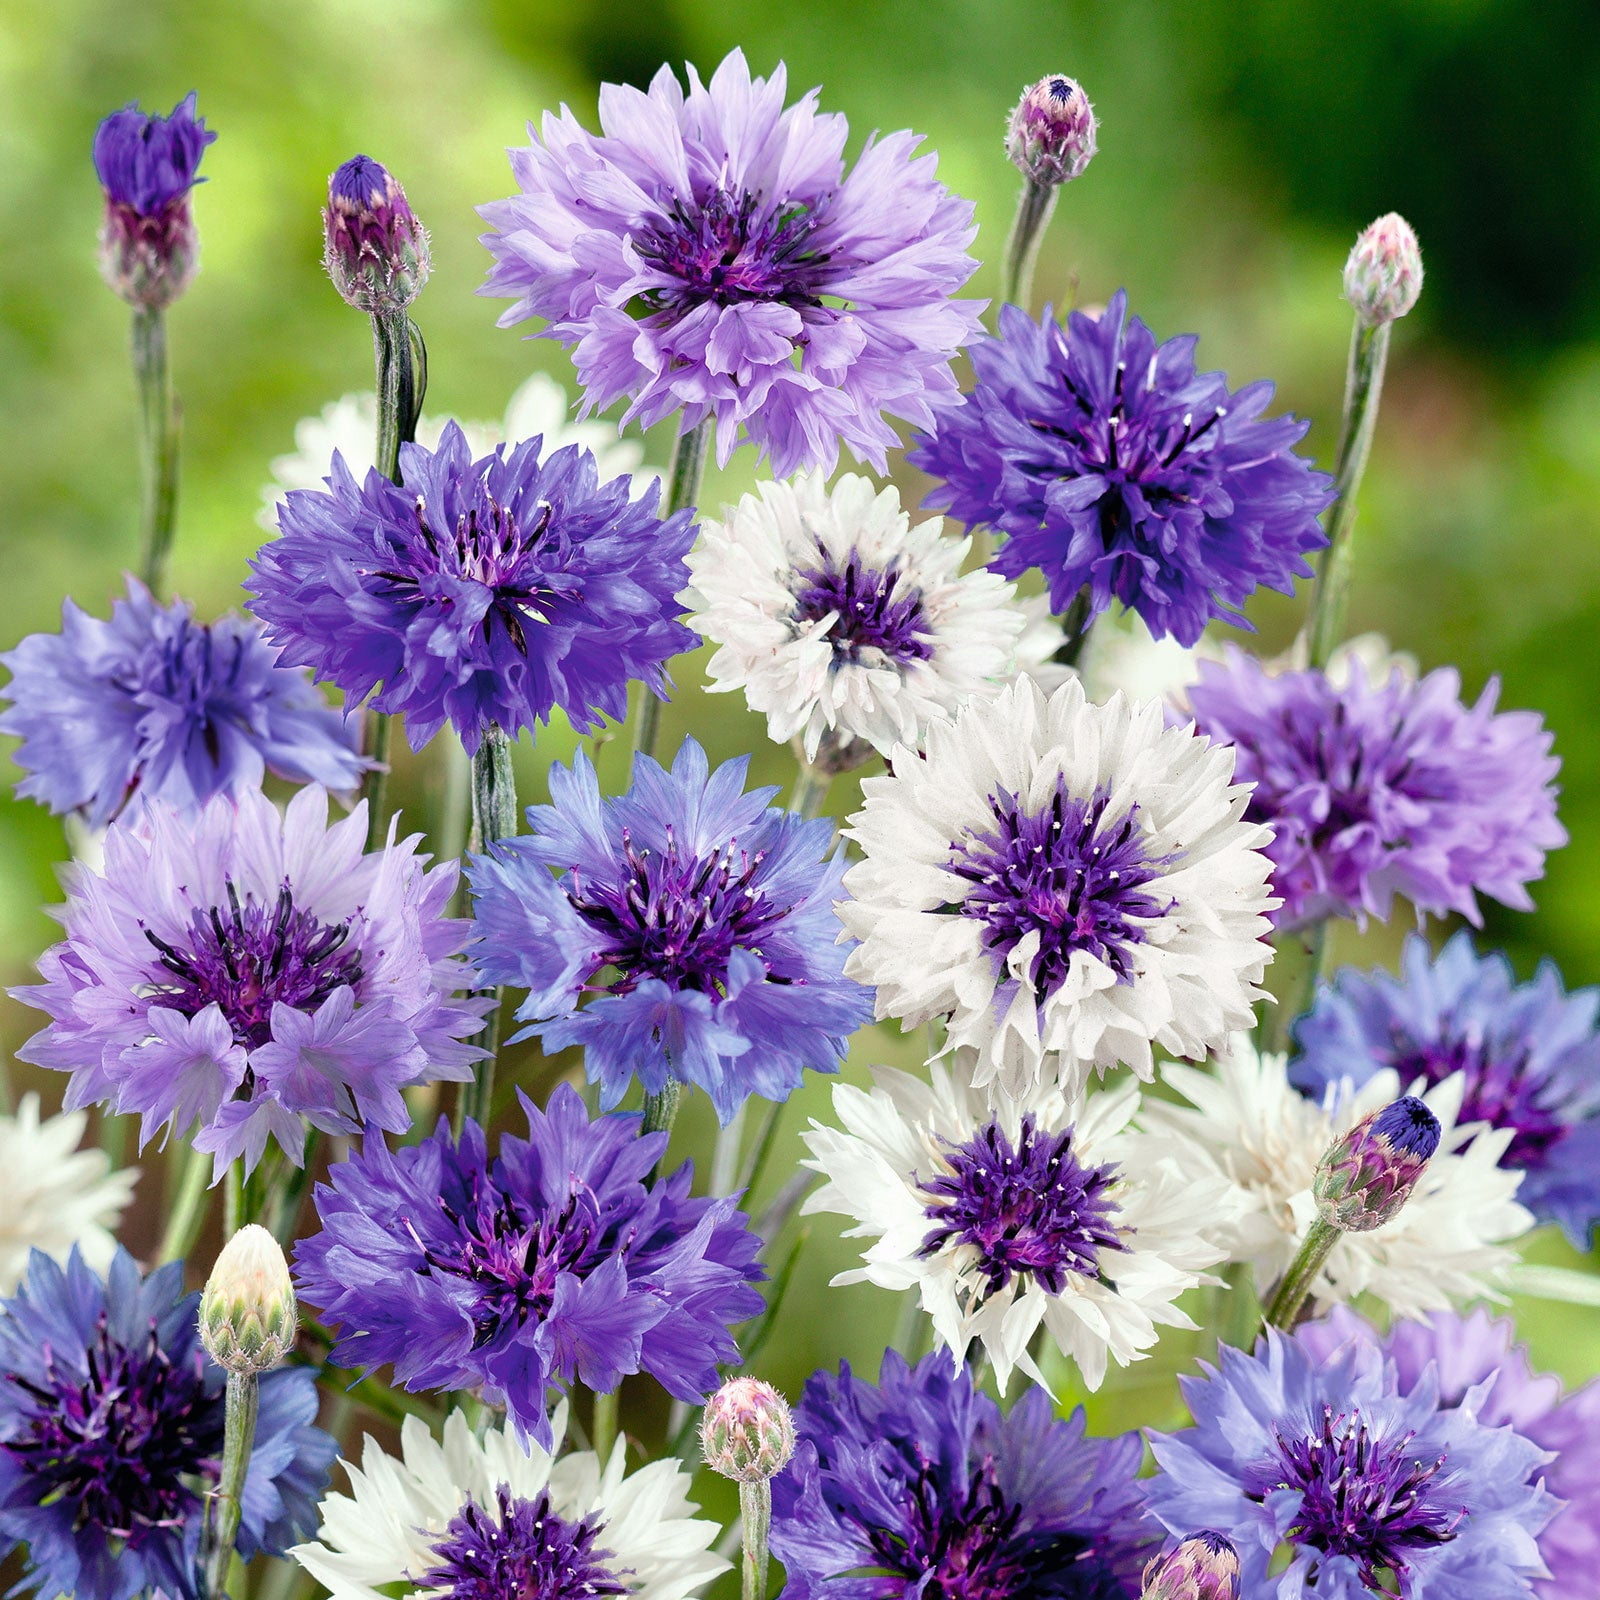 Cornflower/Bachelor Button Seeds - Dwarf Mix - 1 Ounce - Blue/White/Pink  Flower Seeds, Heirloom Seed Attracts Bees, Attracts Butterflies, Attracts